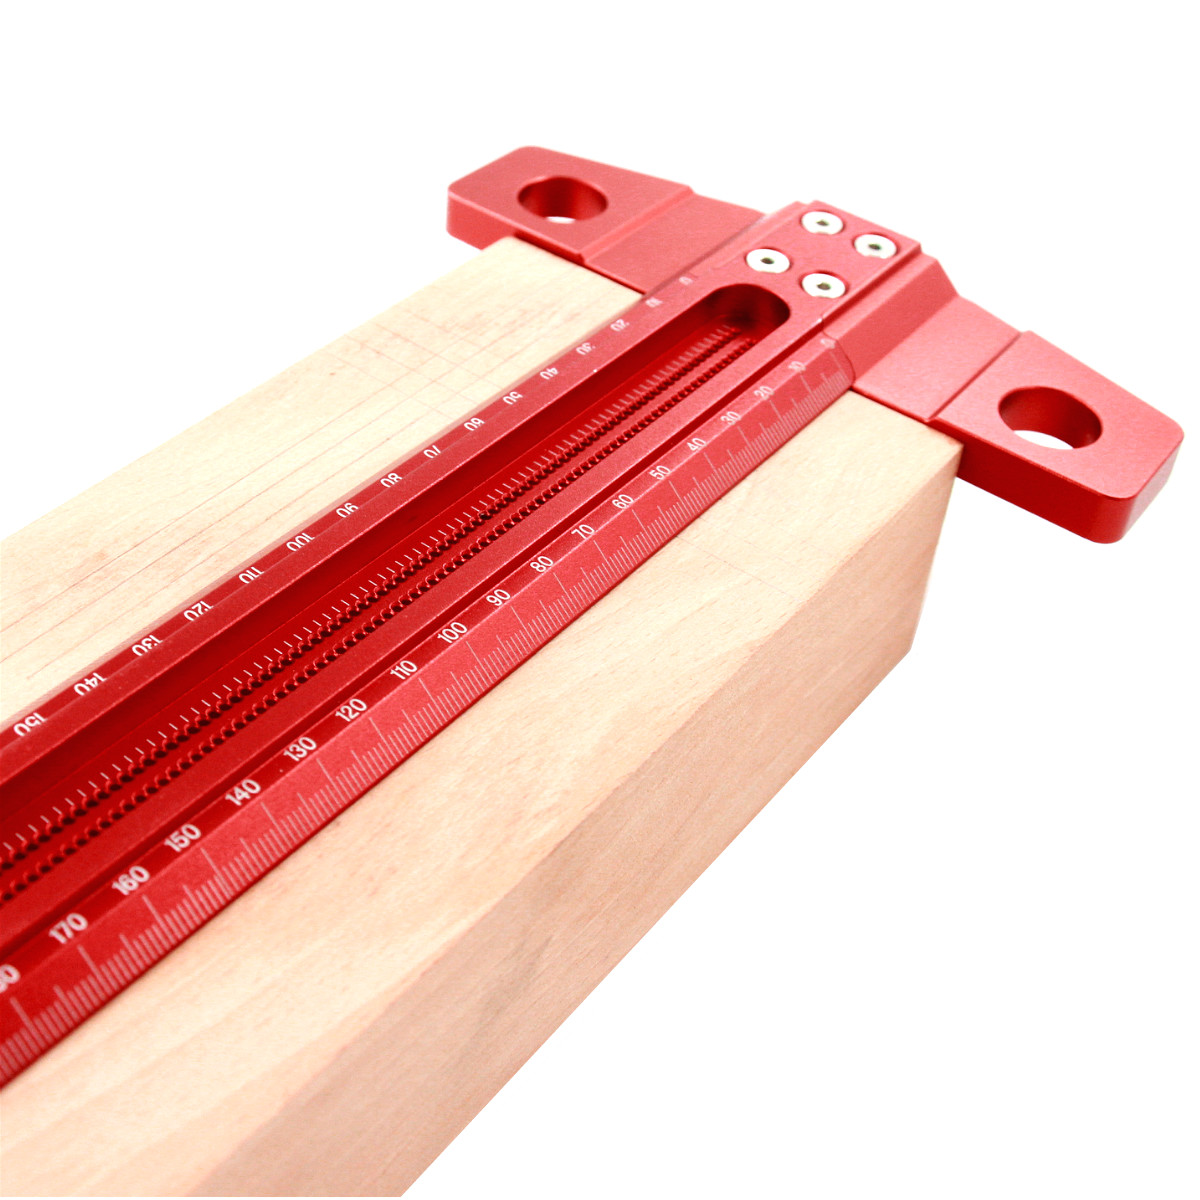 ETOPOO-Woodworking-T-type-Line-Scriber-Hole-Scale-Ruler-Aluminum-Alloy-Marking-Gauge-Crossed-Line-Sc-1798711-2